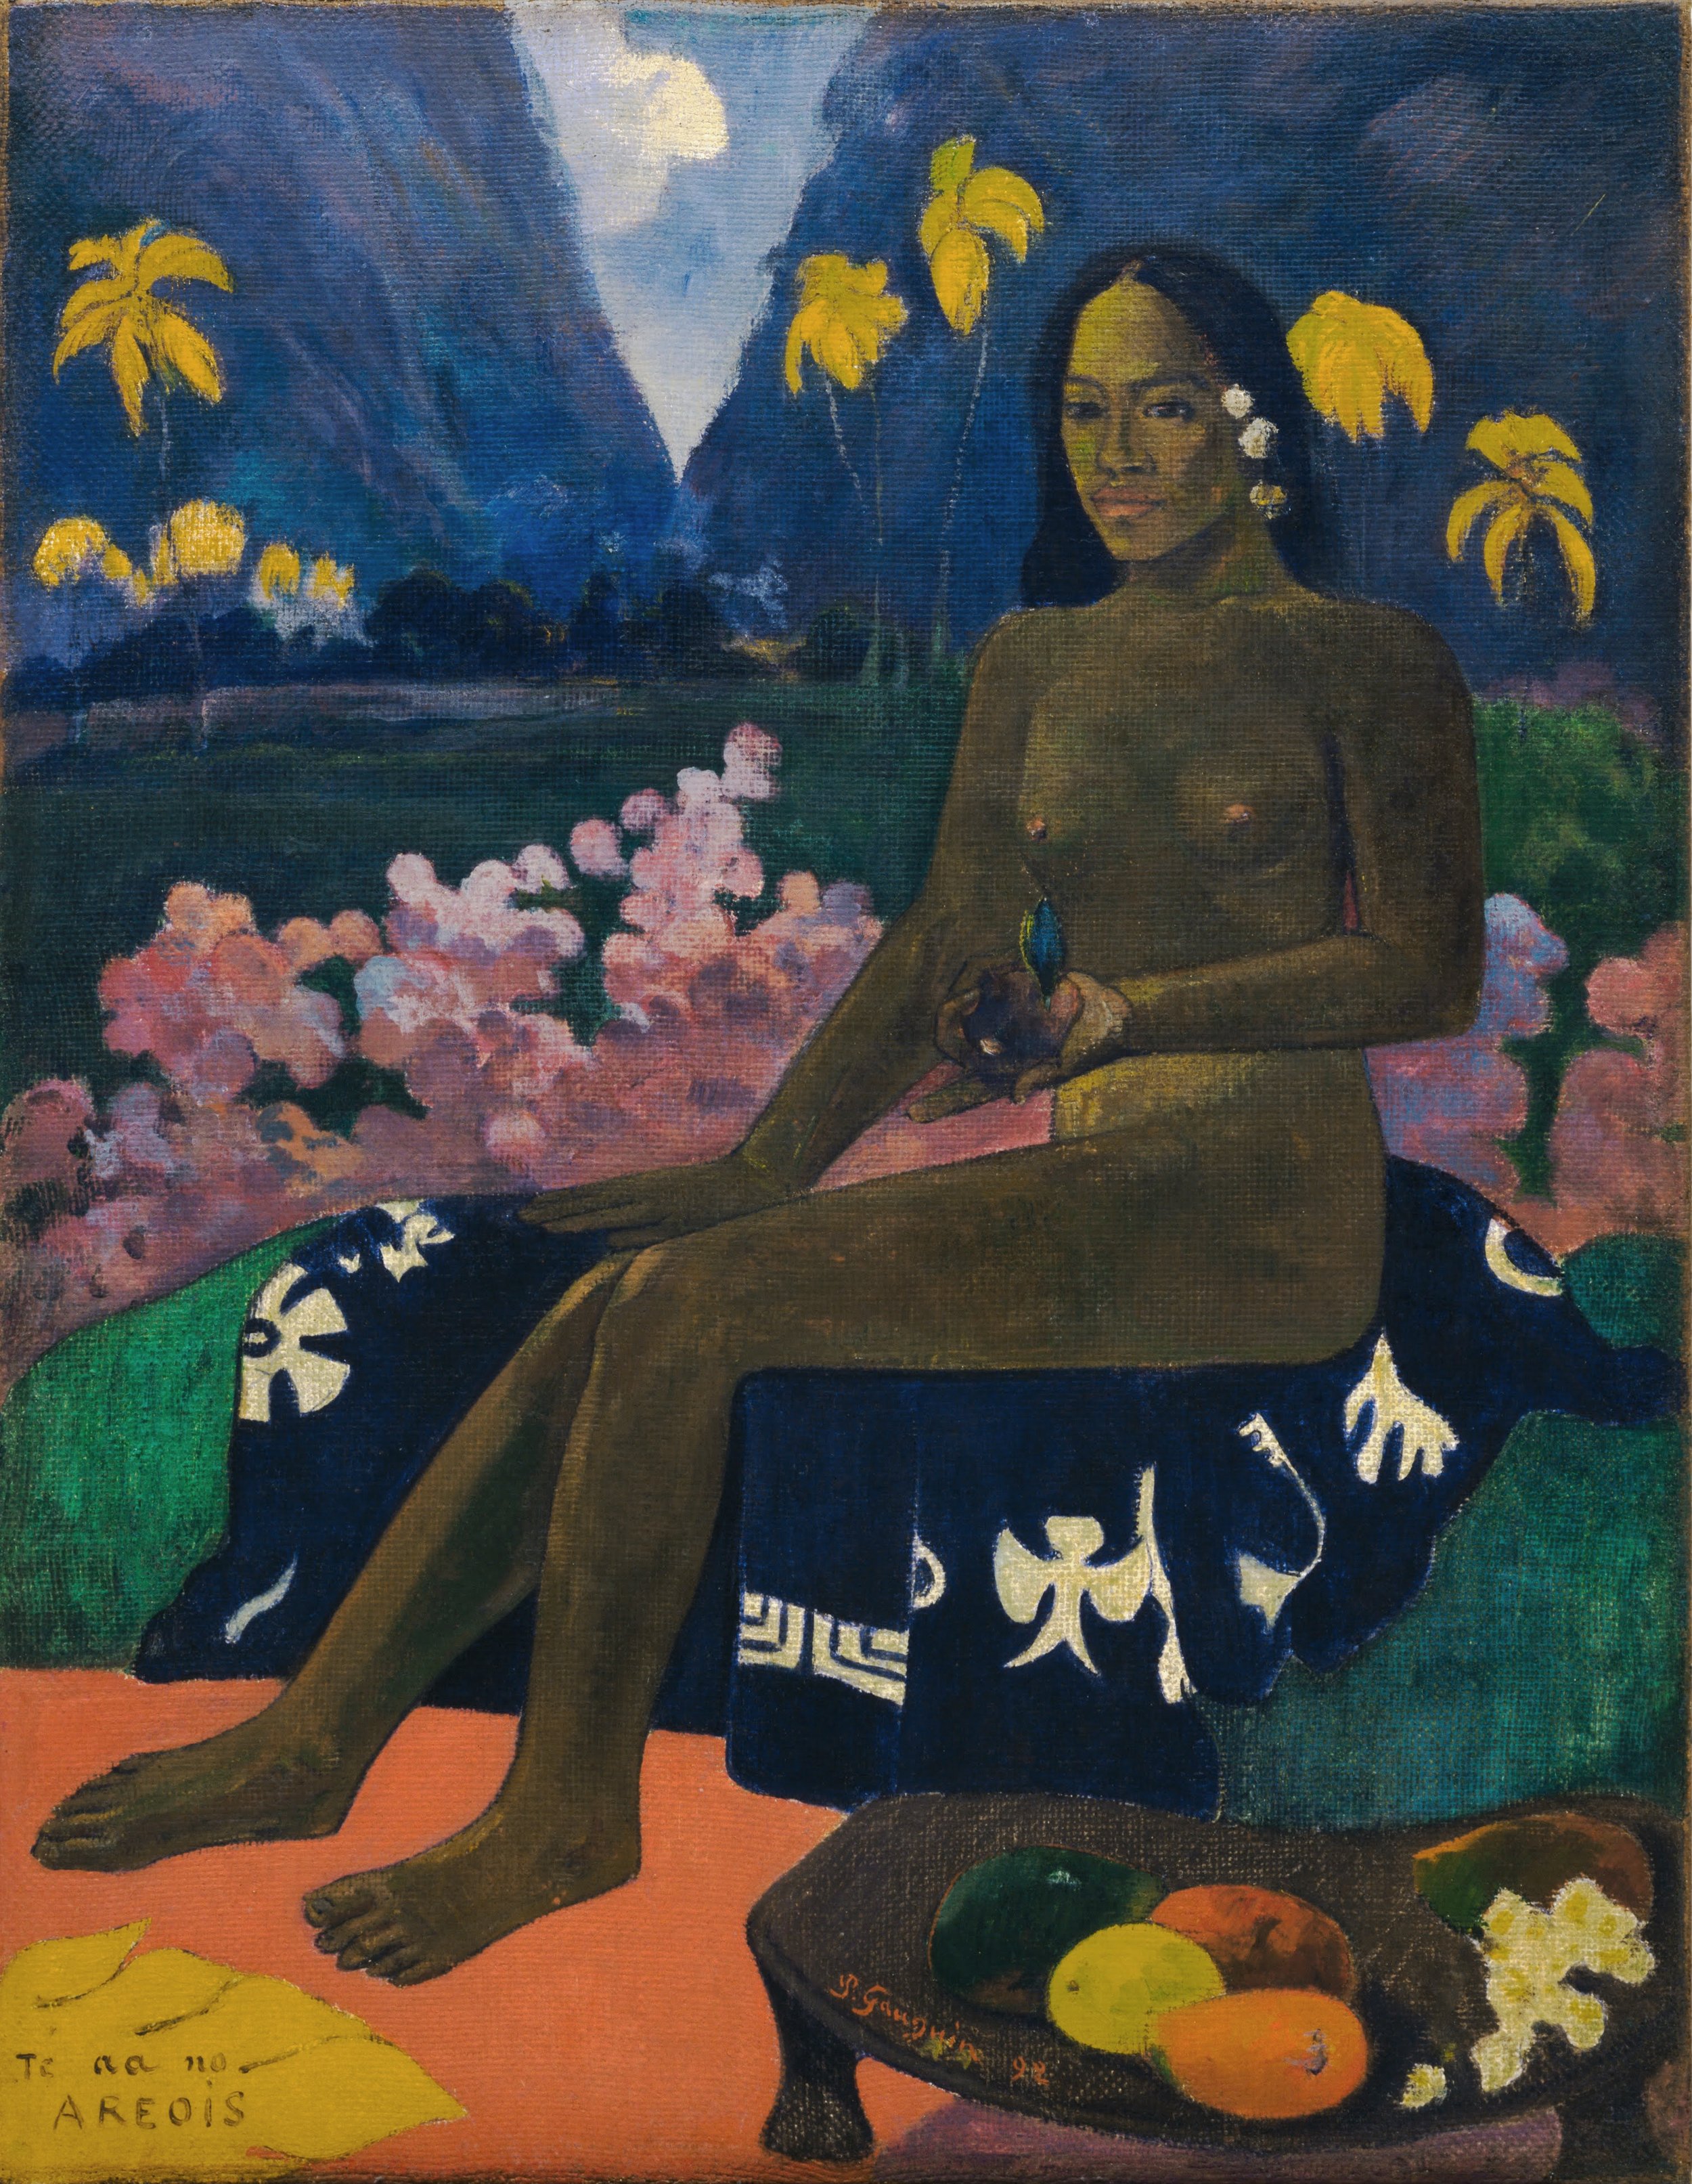 Paul_Gauguin_-_Te_aa_no_areois_-_Google_Art_Project.jpg